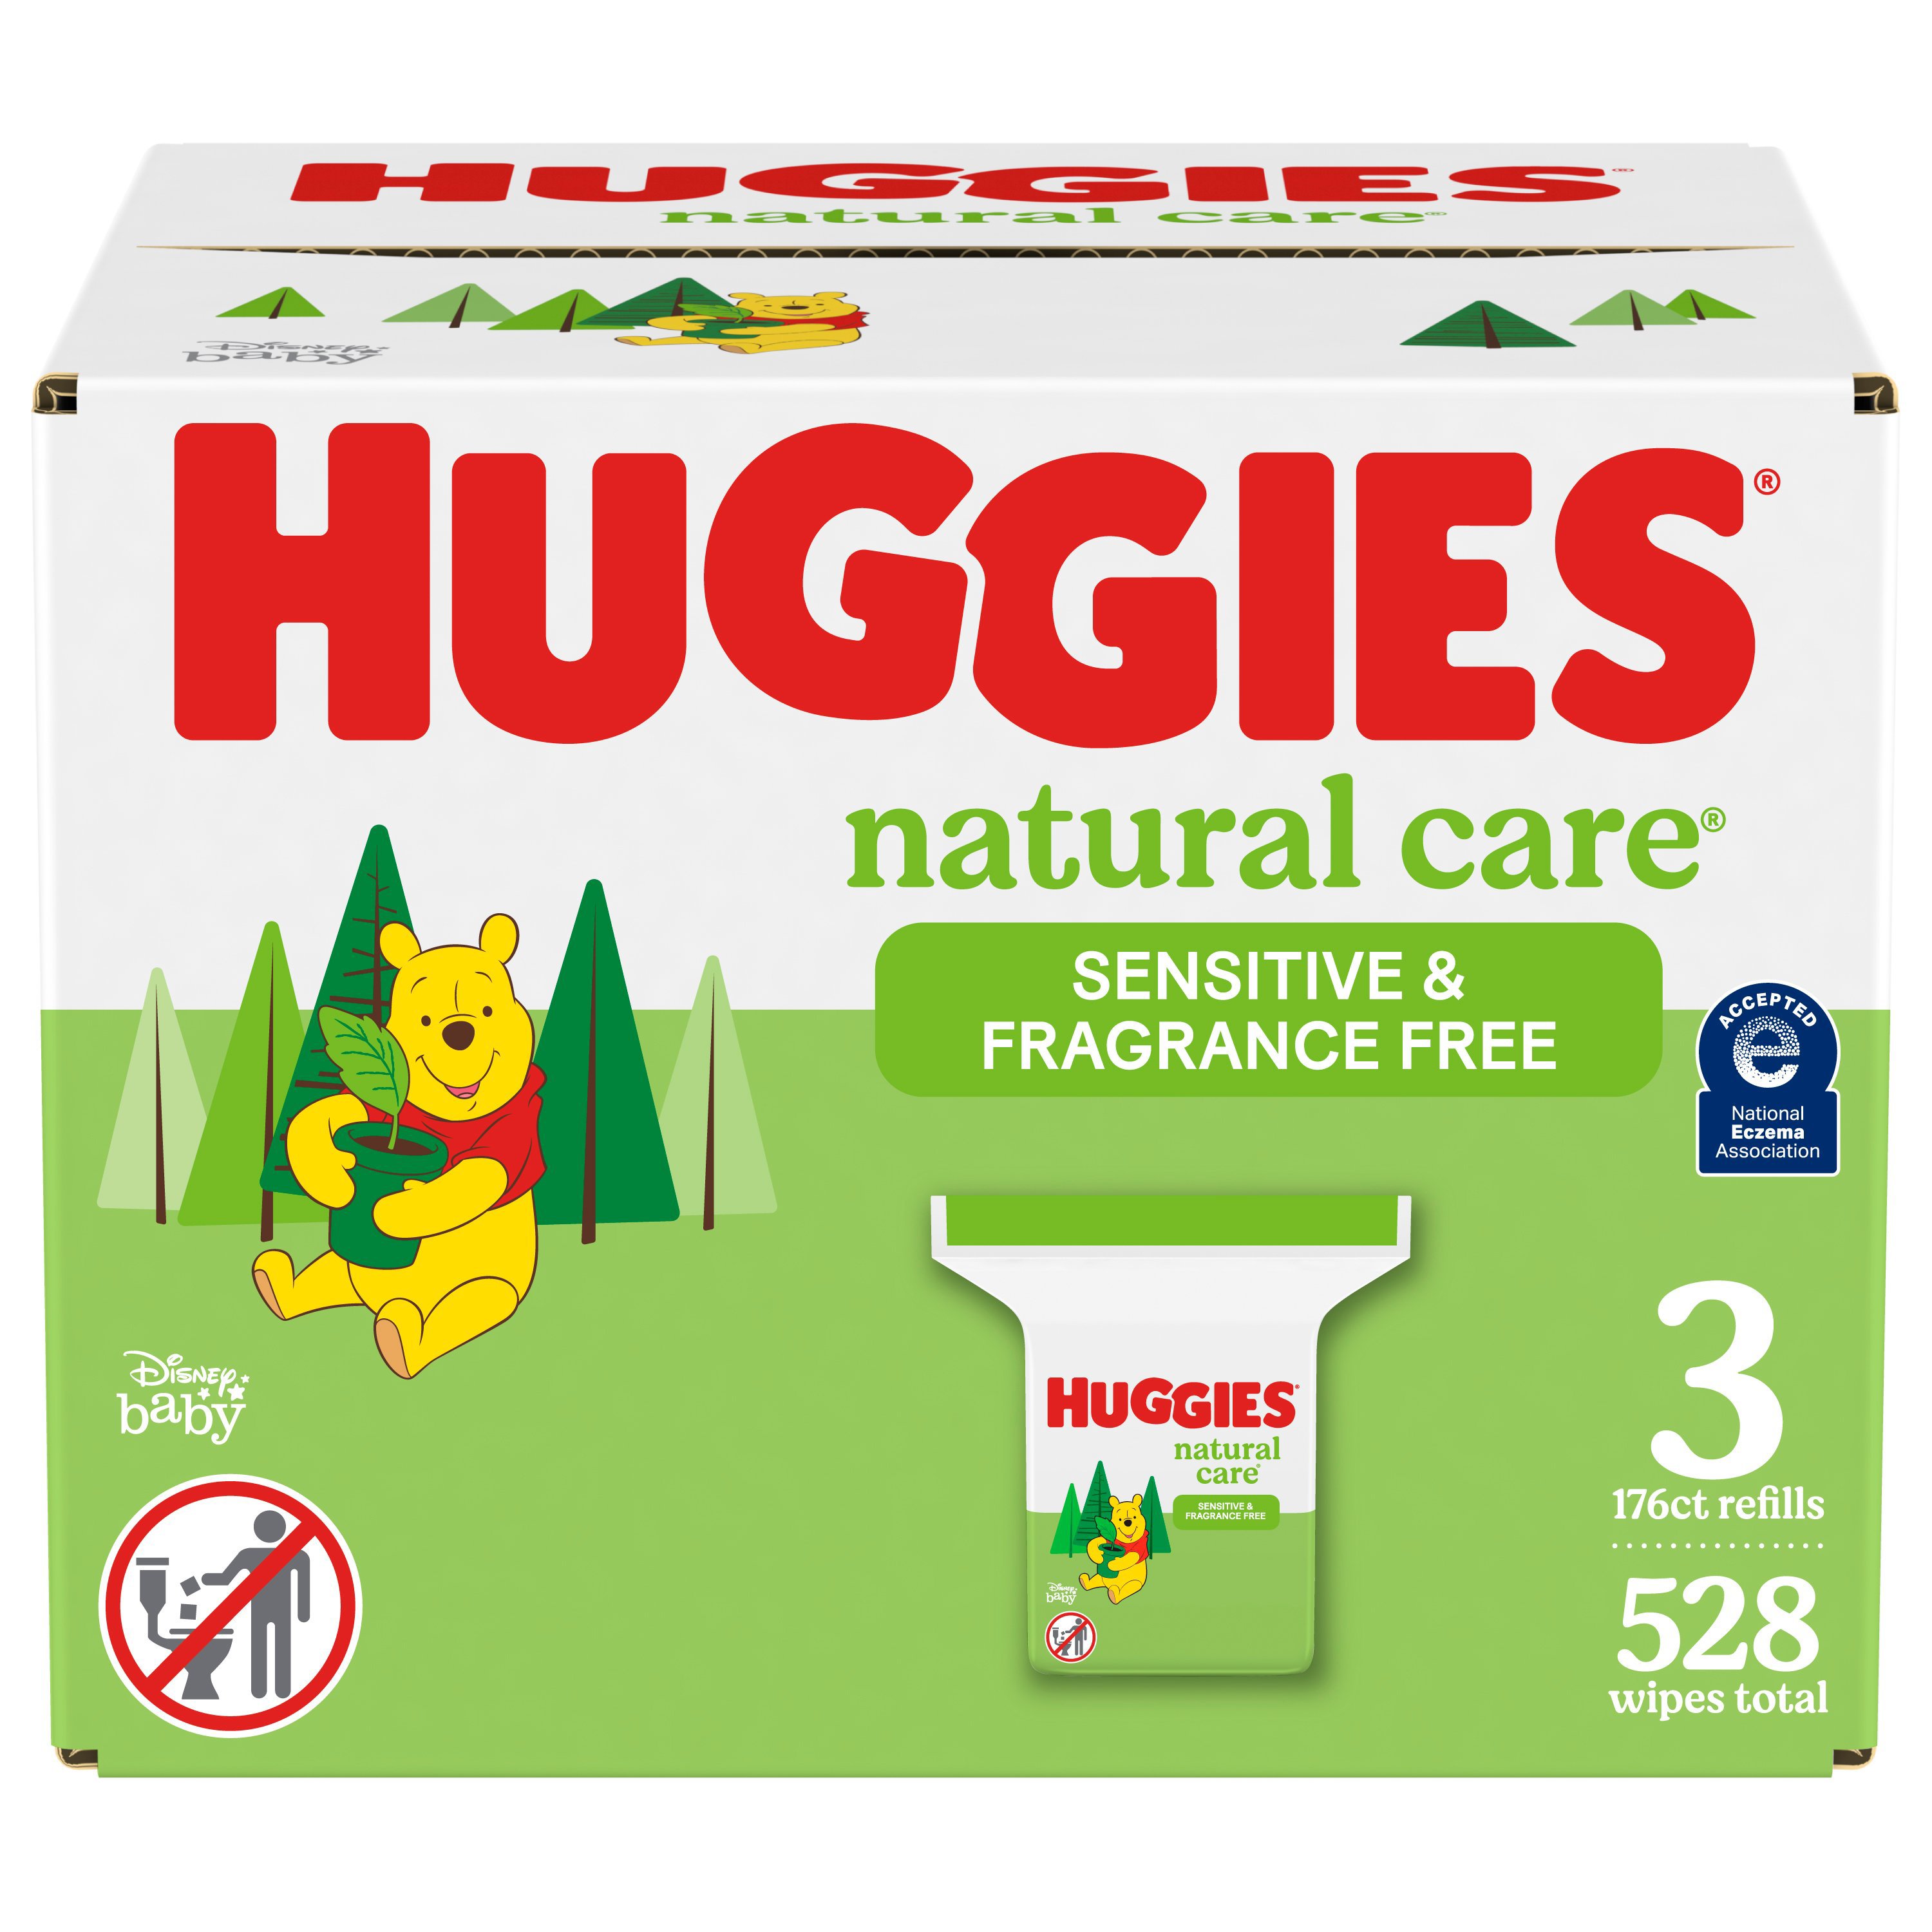 huggies natural care baby wipes